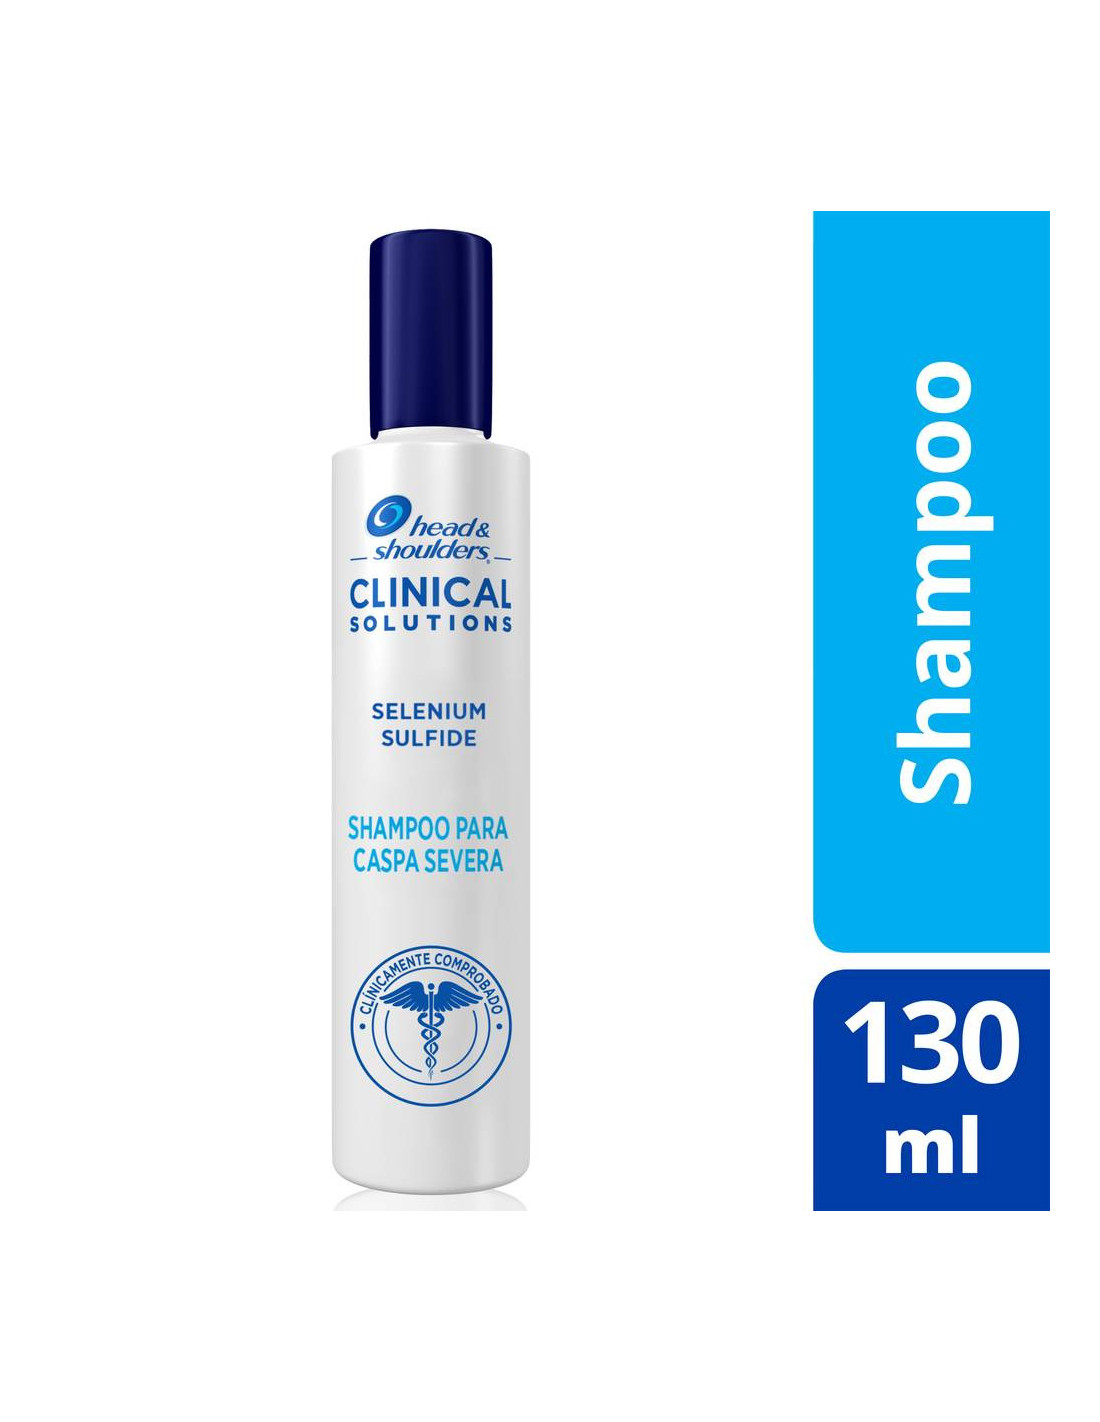 Head & Shoulders Clinical Solutions Shampoo para Caspa